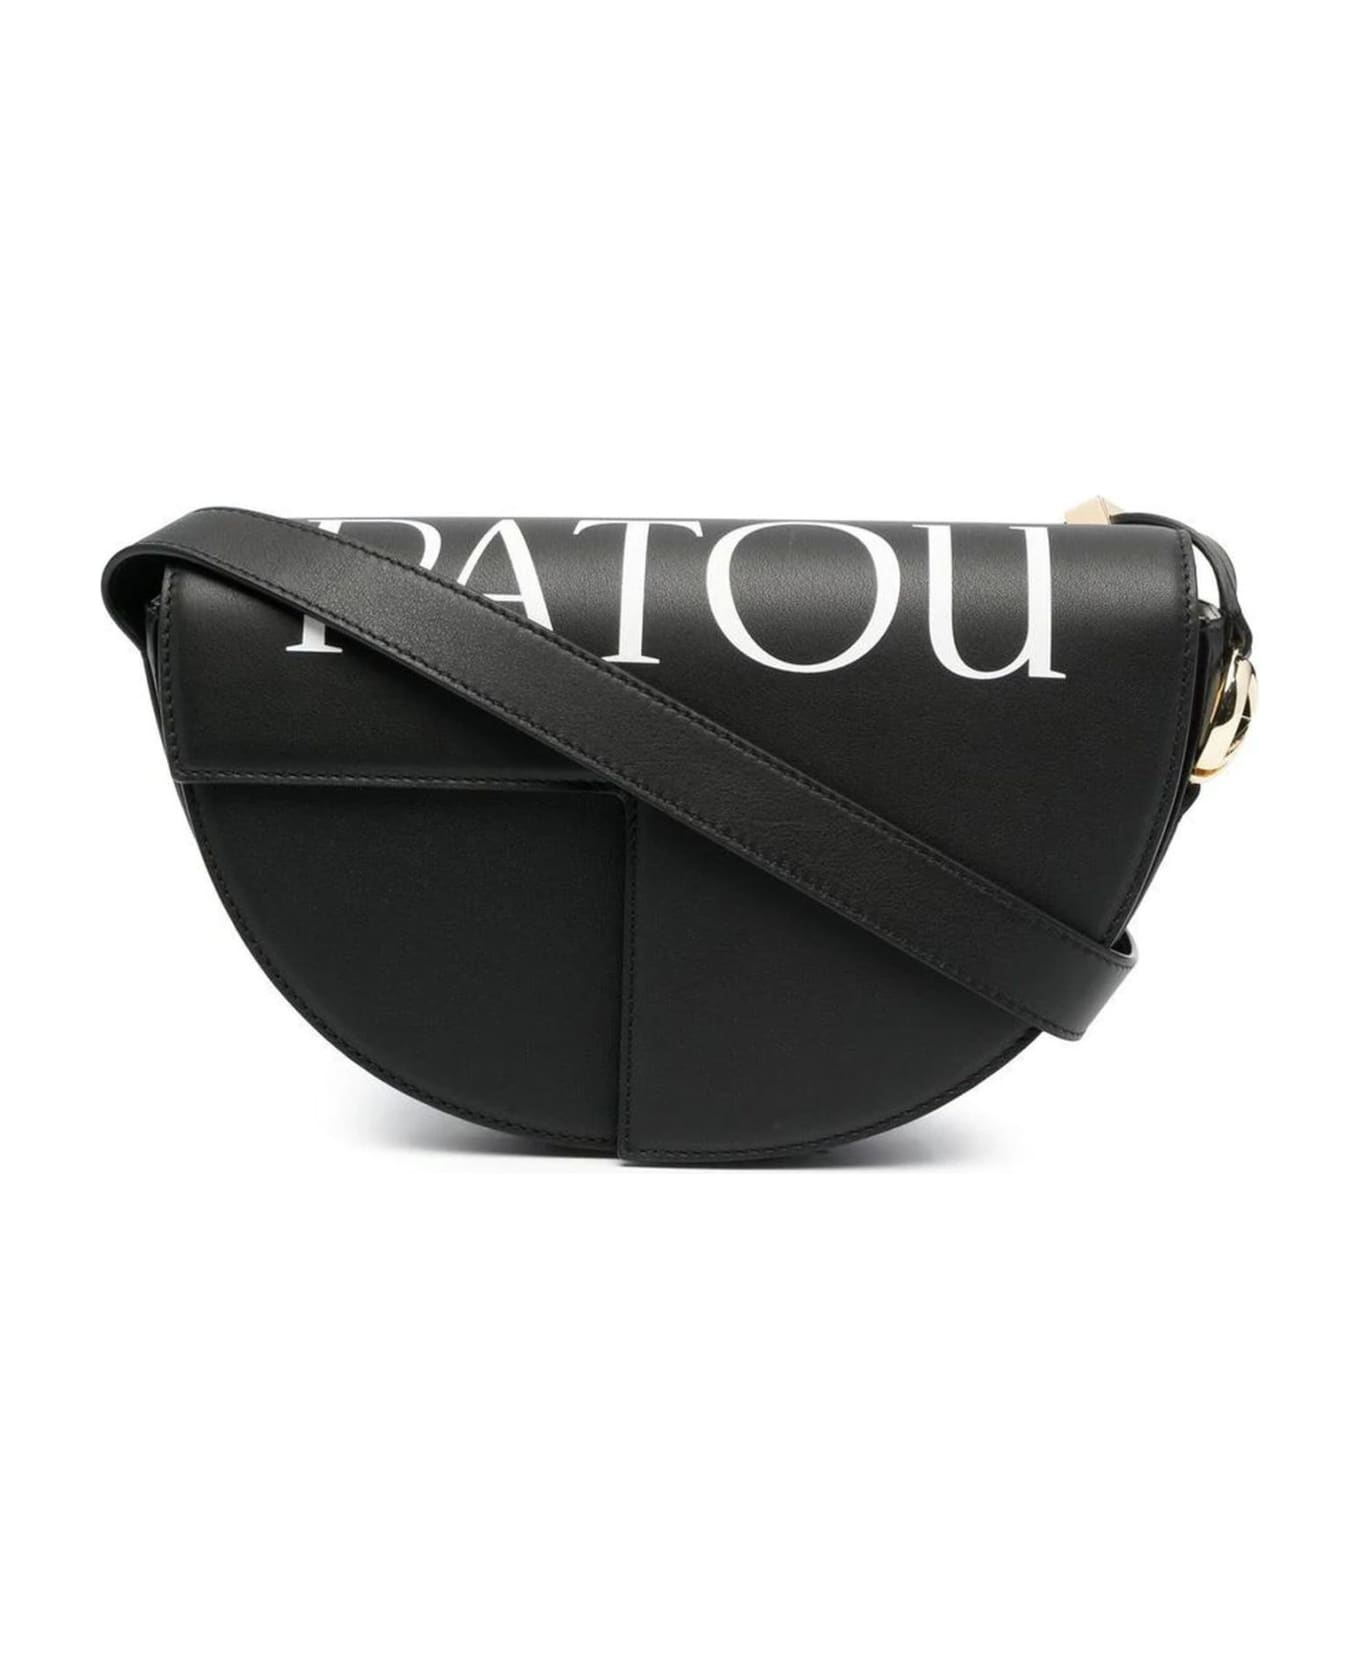 Patou Black Leather Handbag - Black